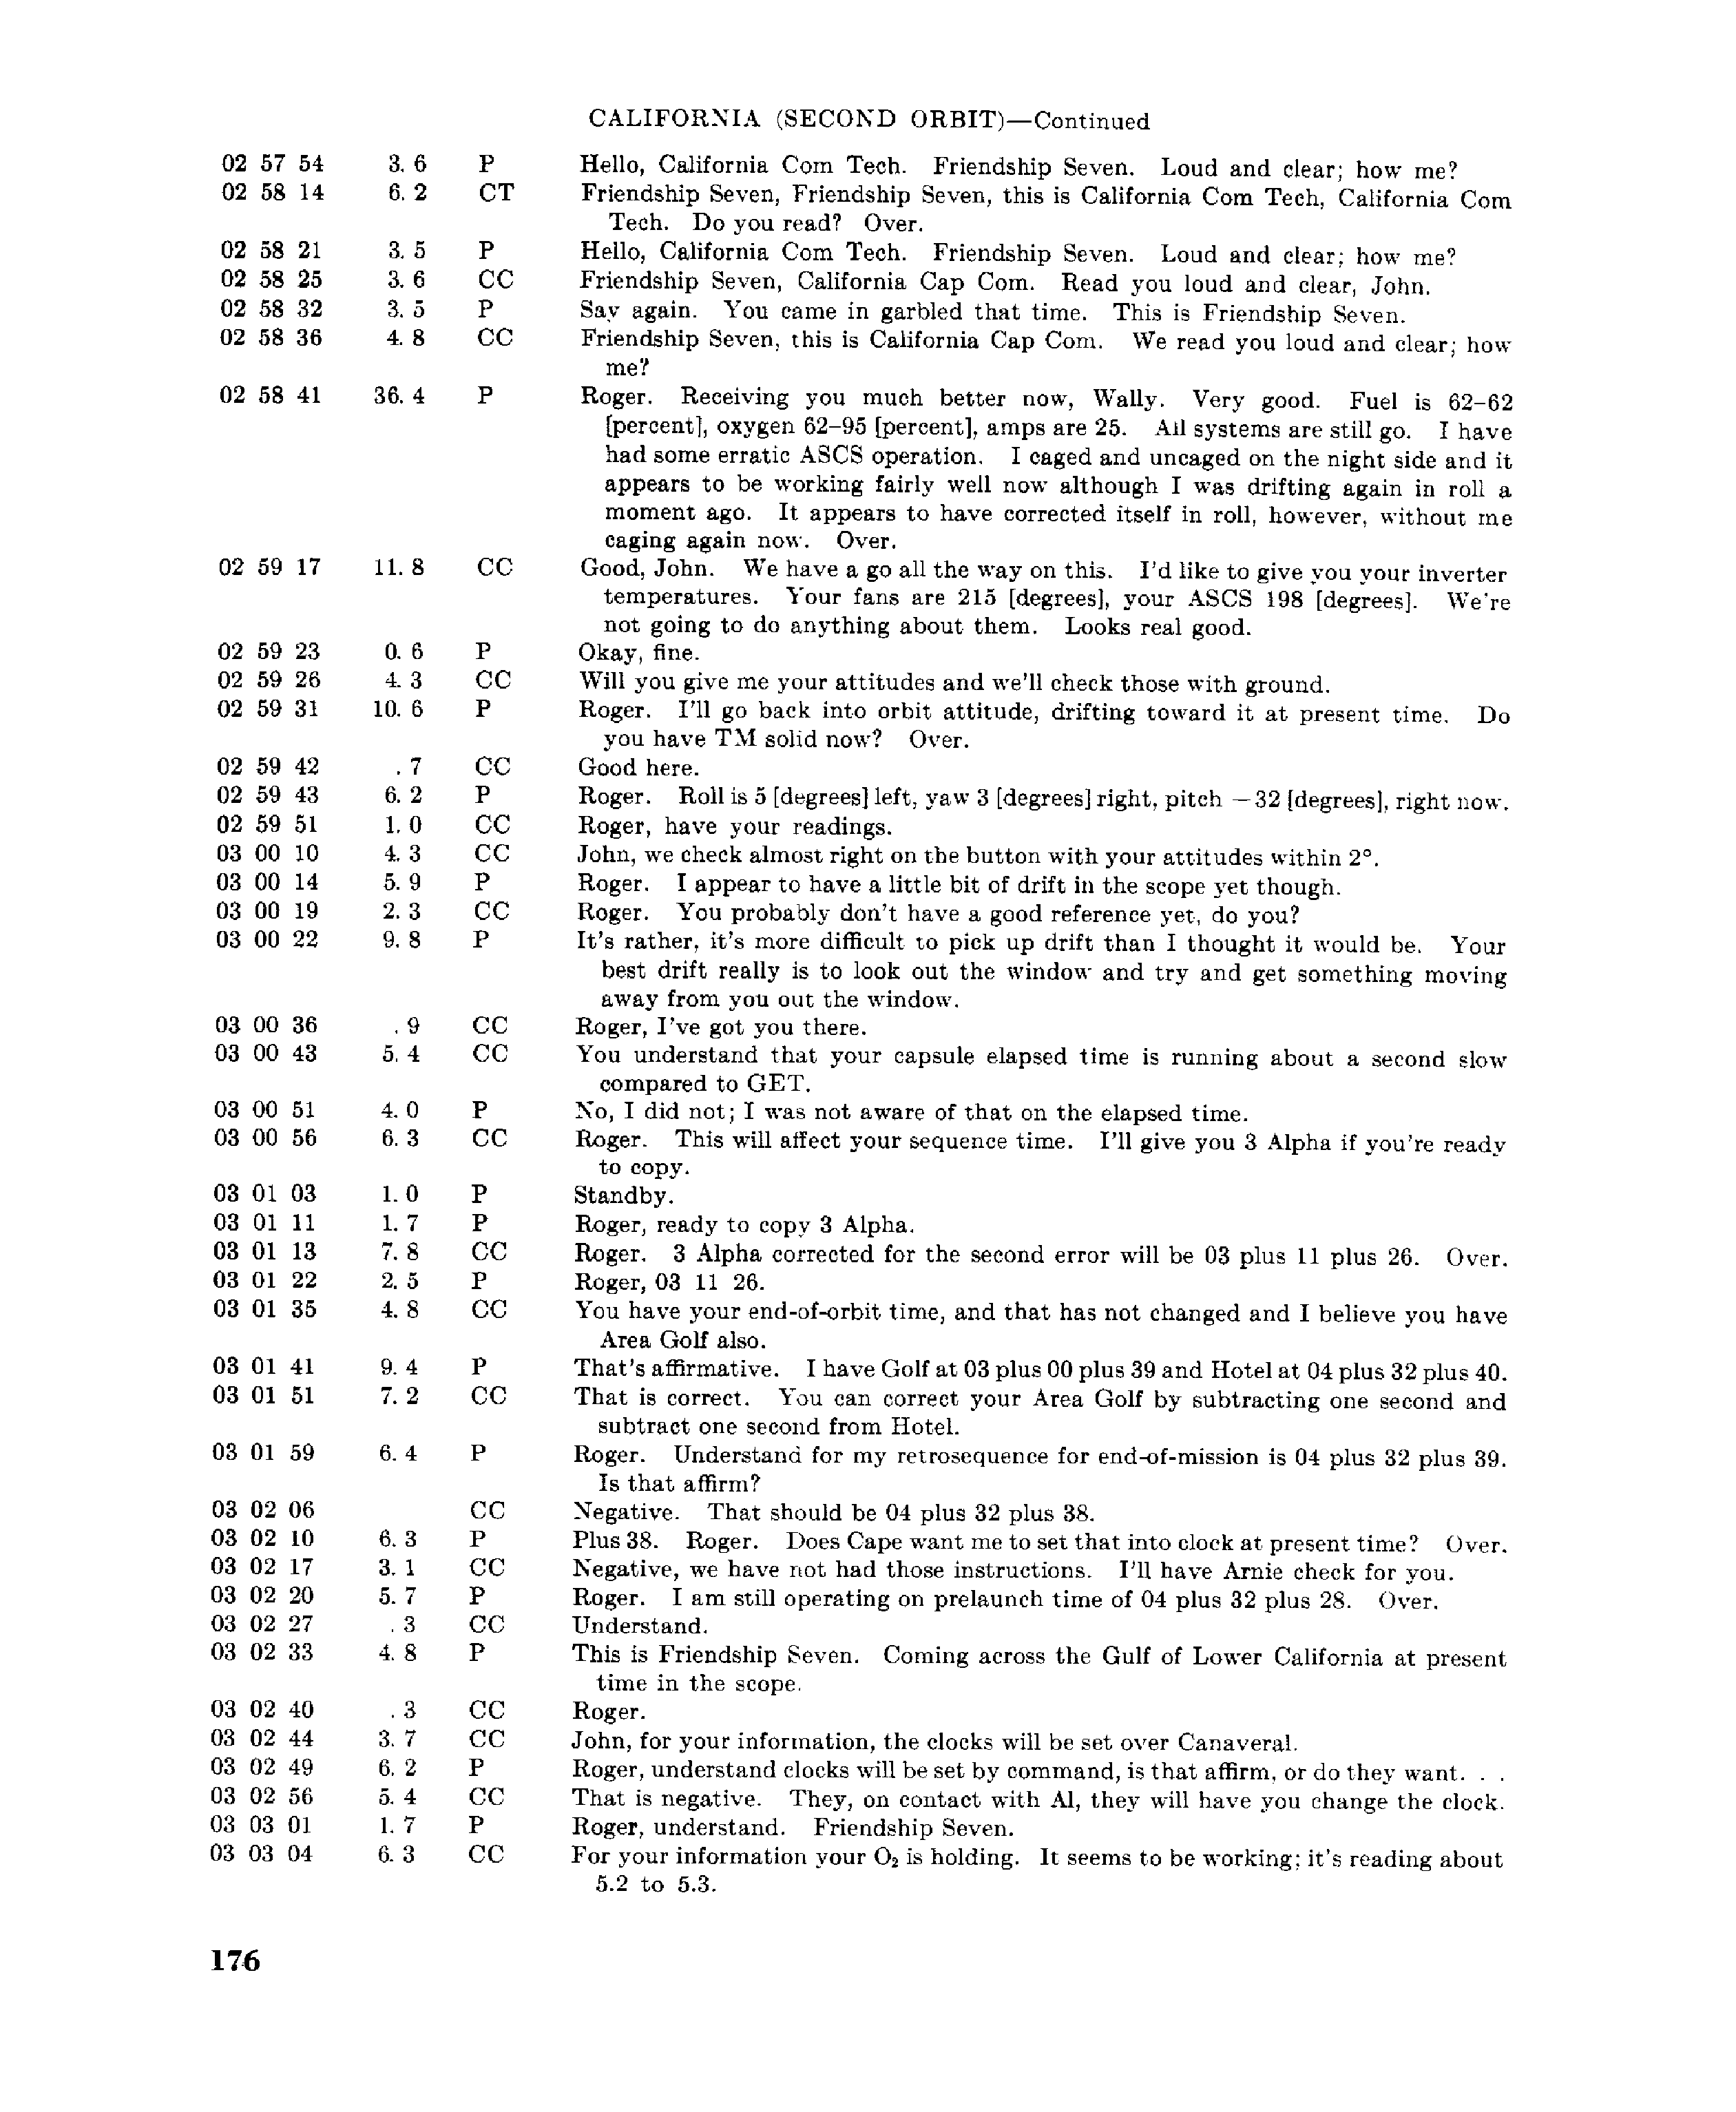 Page 175 of Mercury 6’s original transcript